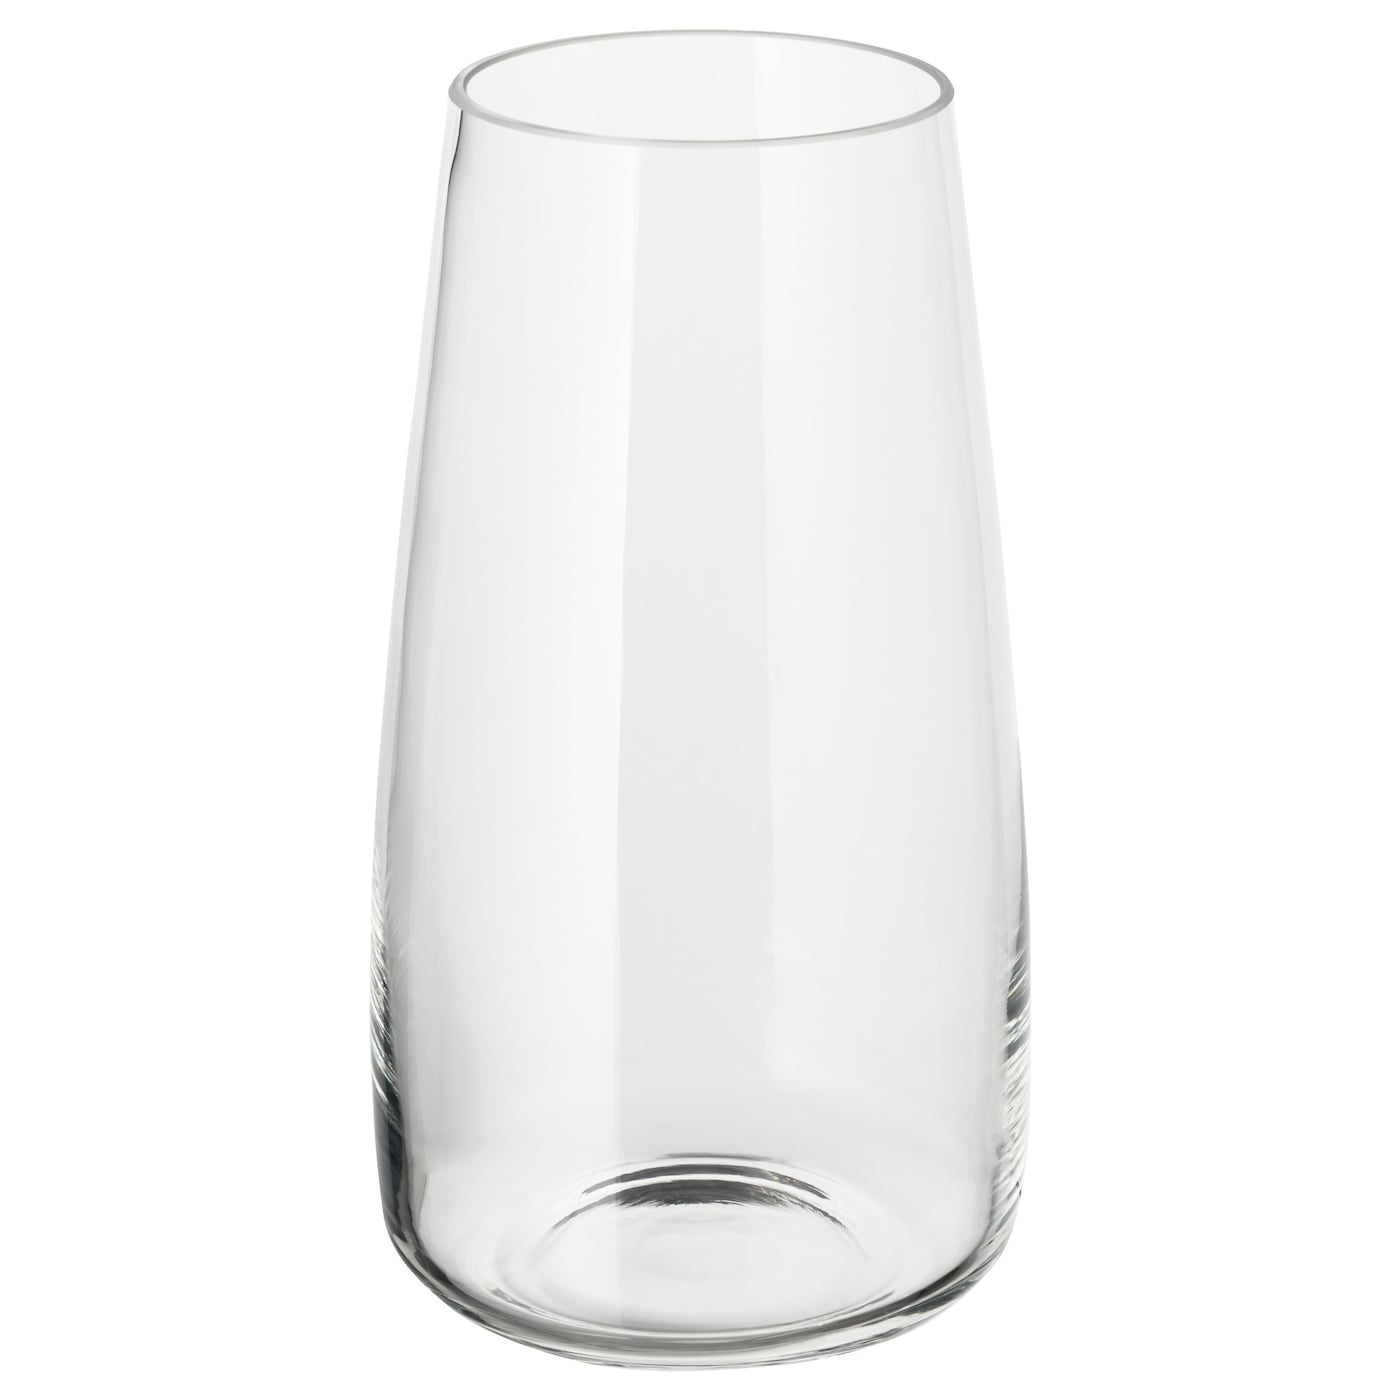 BERÄKNA БЕРЭКНА Ваза, прозрачное стекло, 30 см IKEA ваза для цветов грация любимому учителю